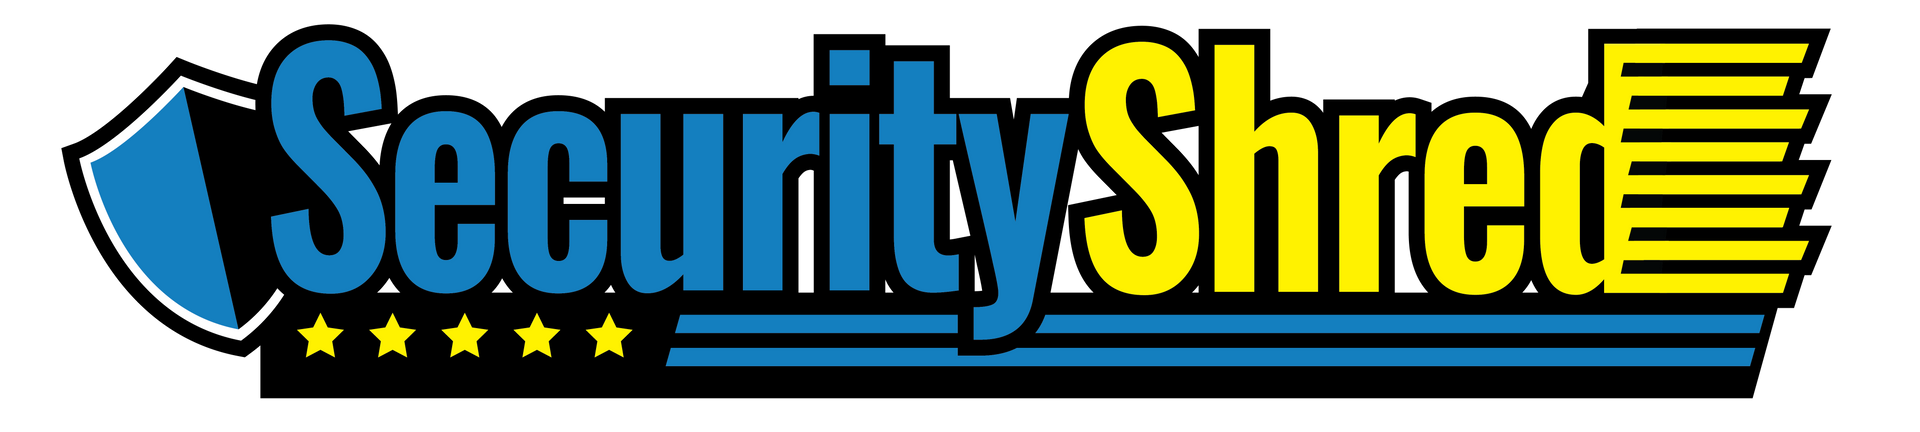 security shred logo